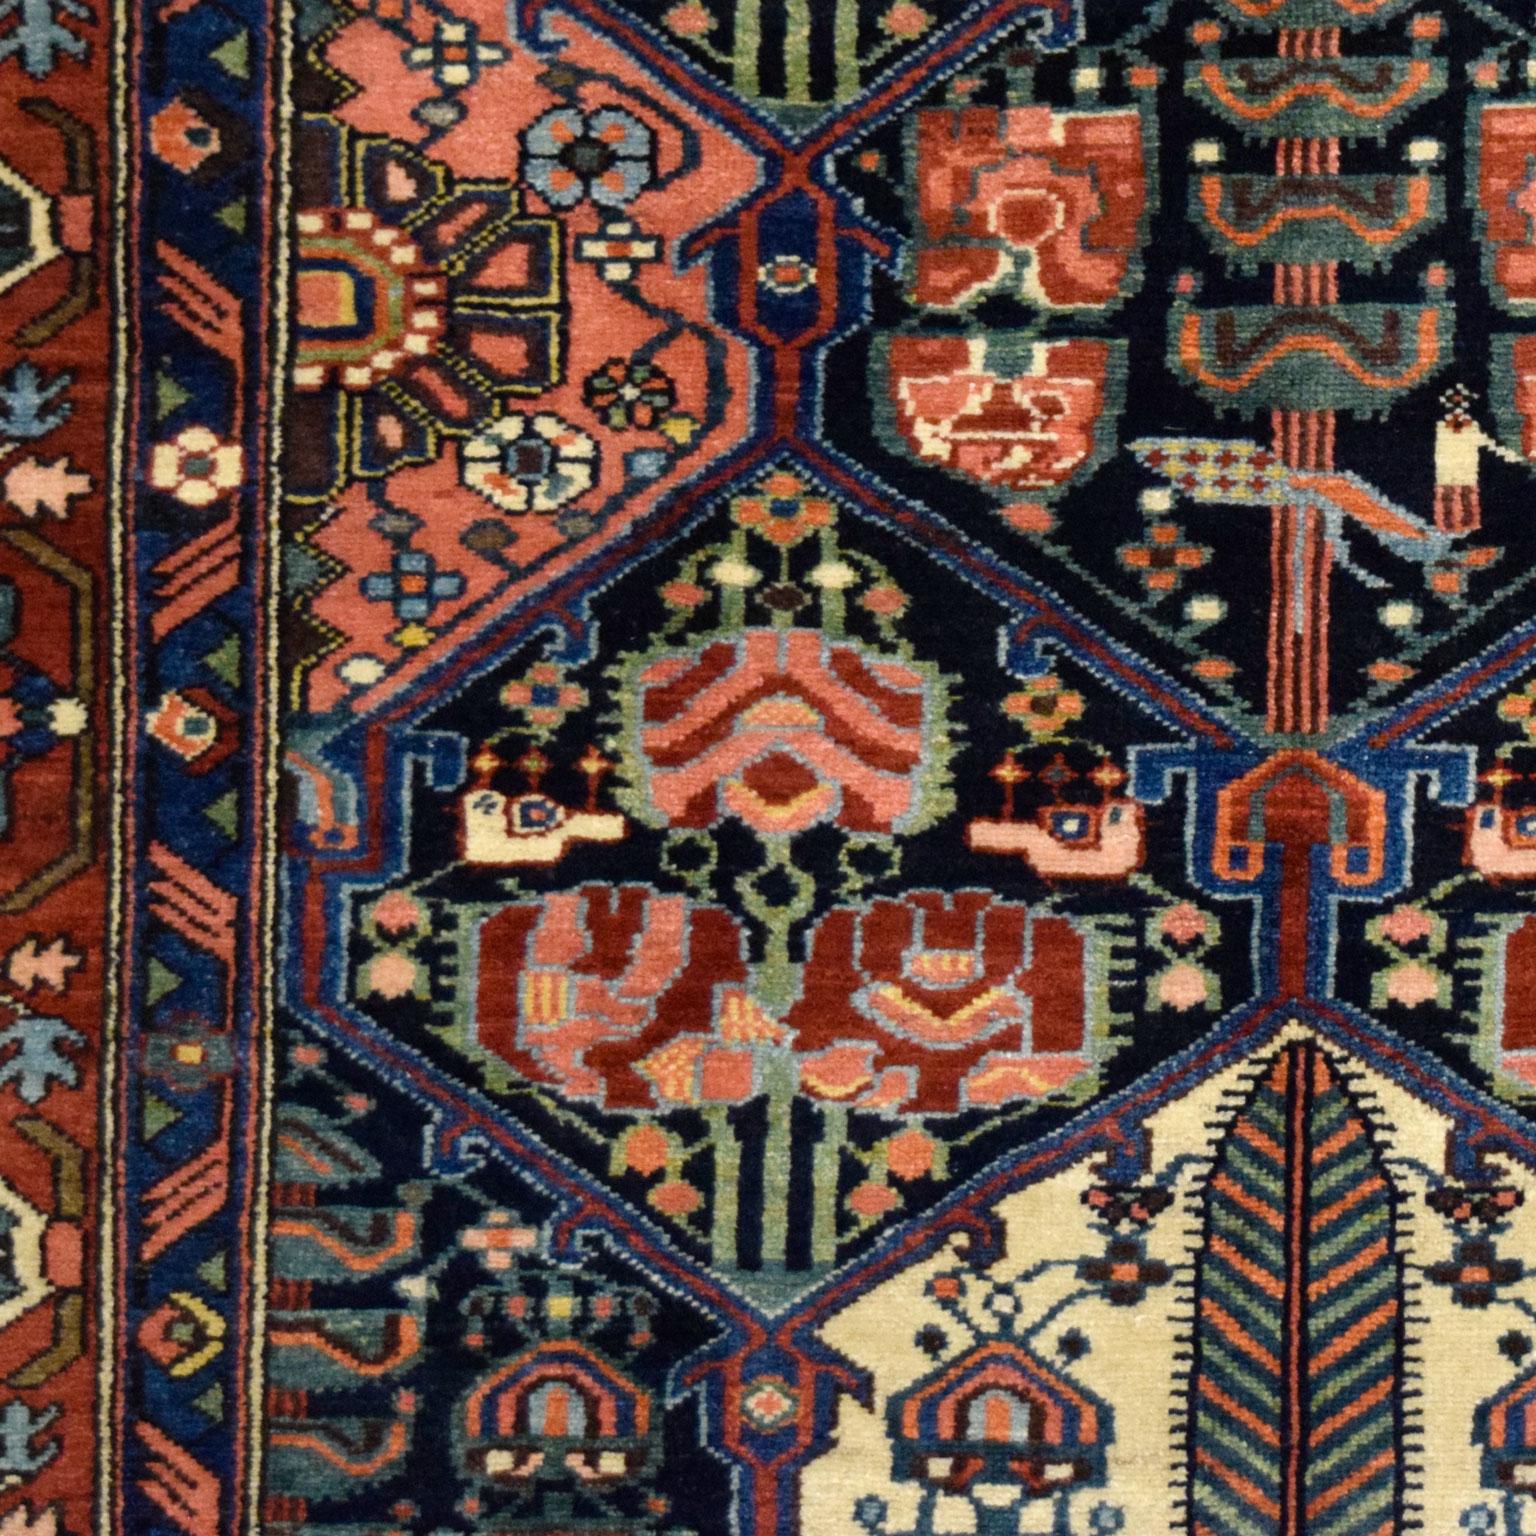 Tribal Antique 1920s Wool Persian Bakhtiari Rug, Classic Lozenge Design, 5' x 7' For Sale